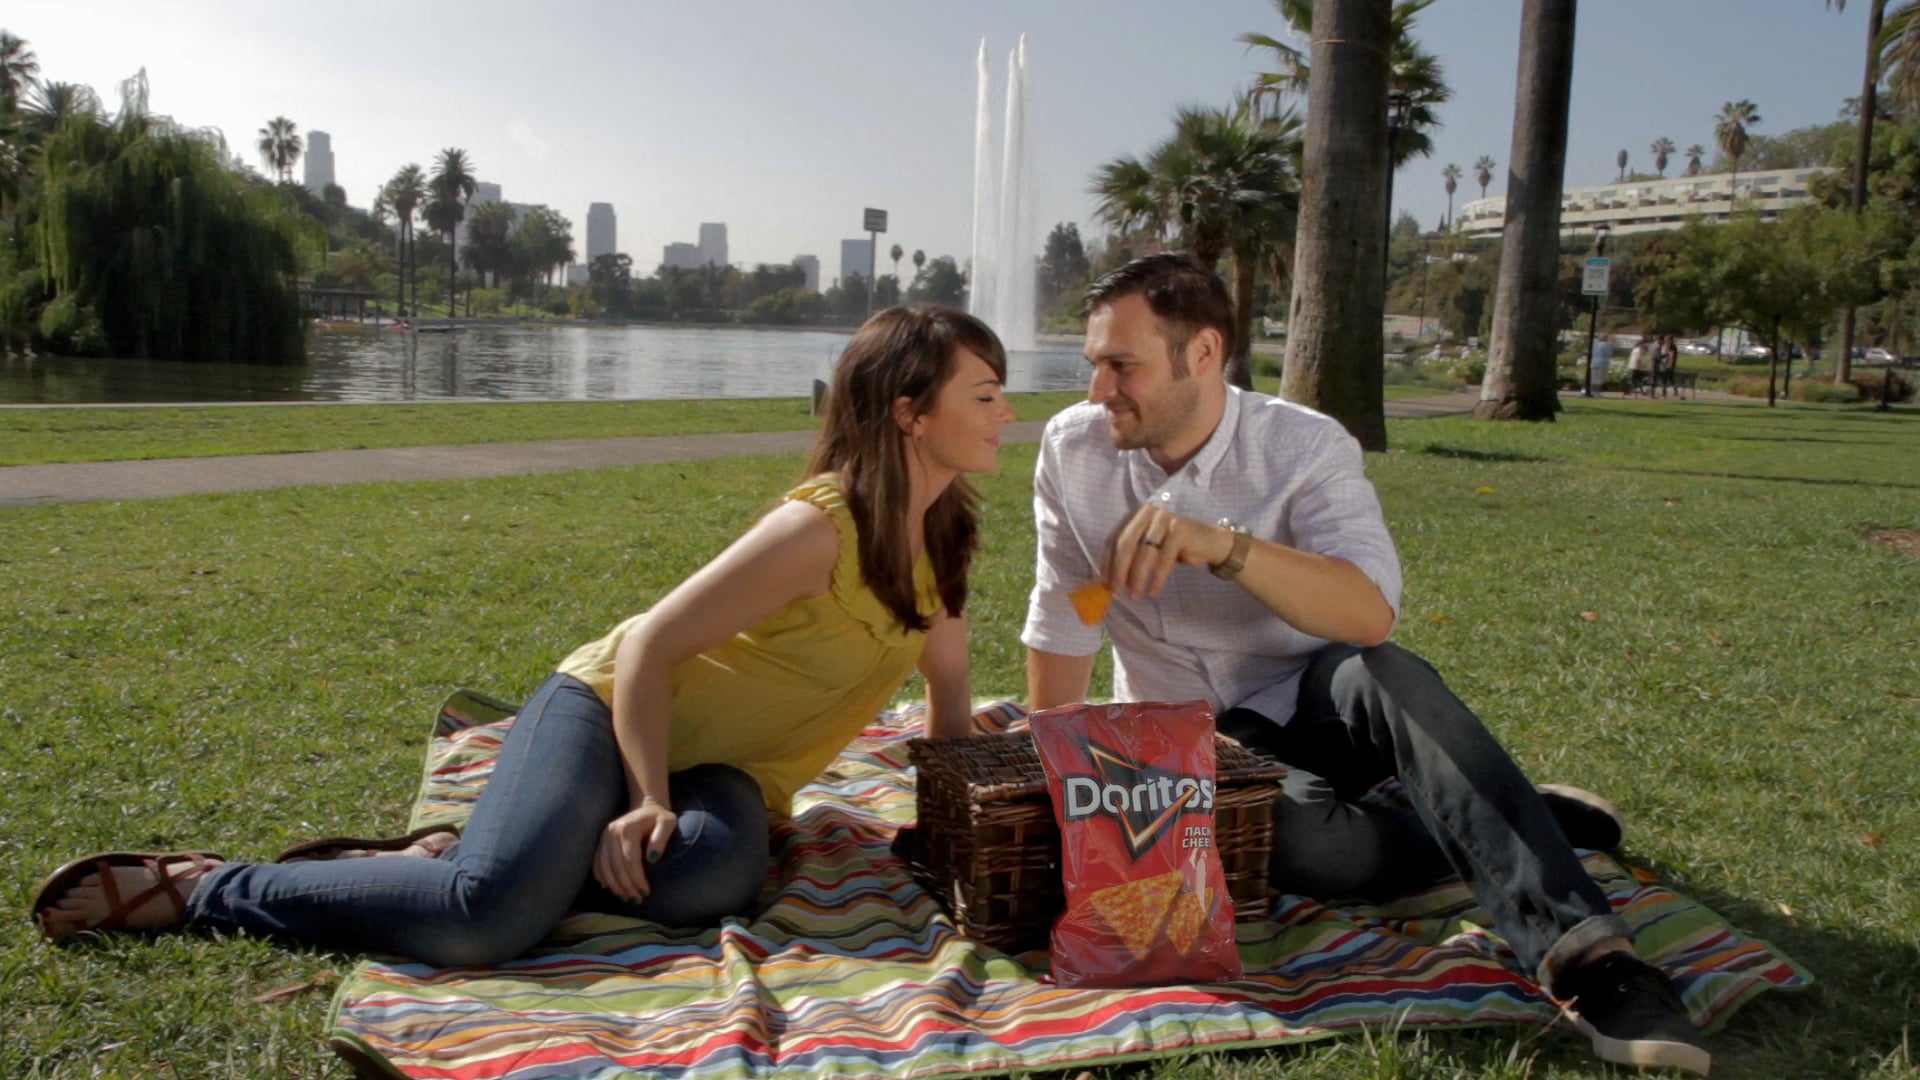 Doritos - “Drone” - Commercial